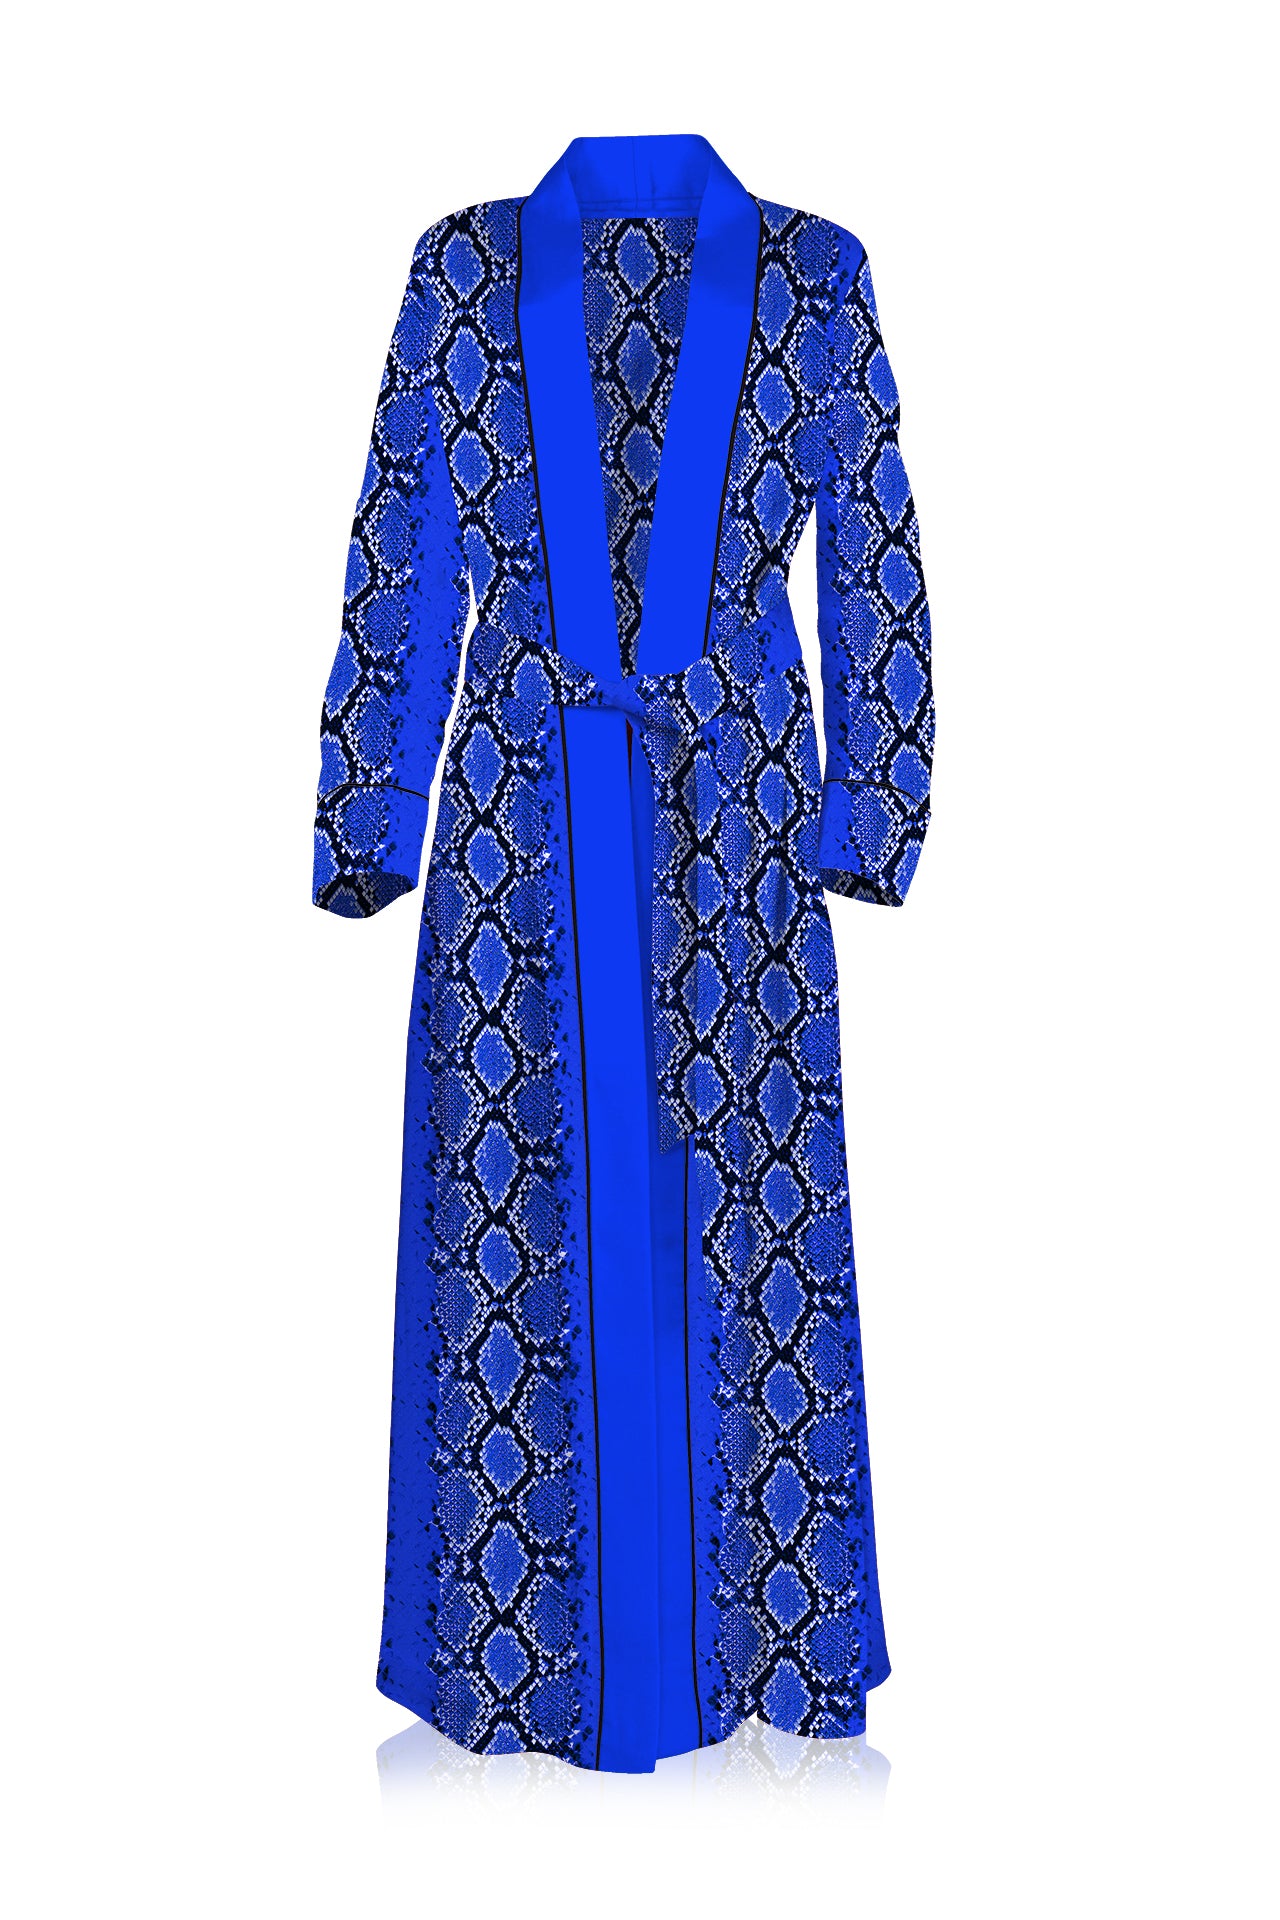 "women's blue robe" "snake print robes" "kim ono silk robe" "Kyle X Shahida"